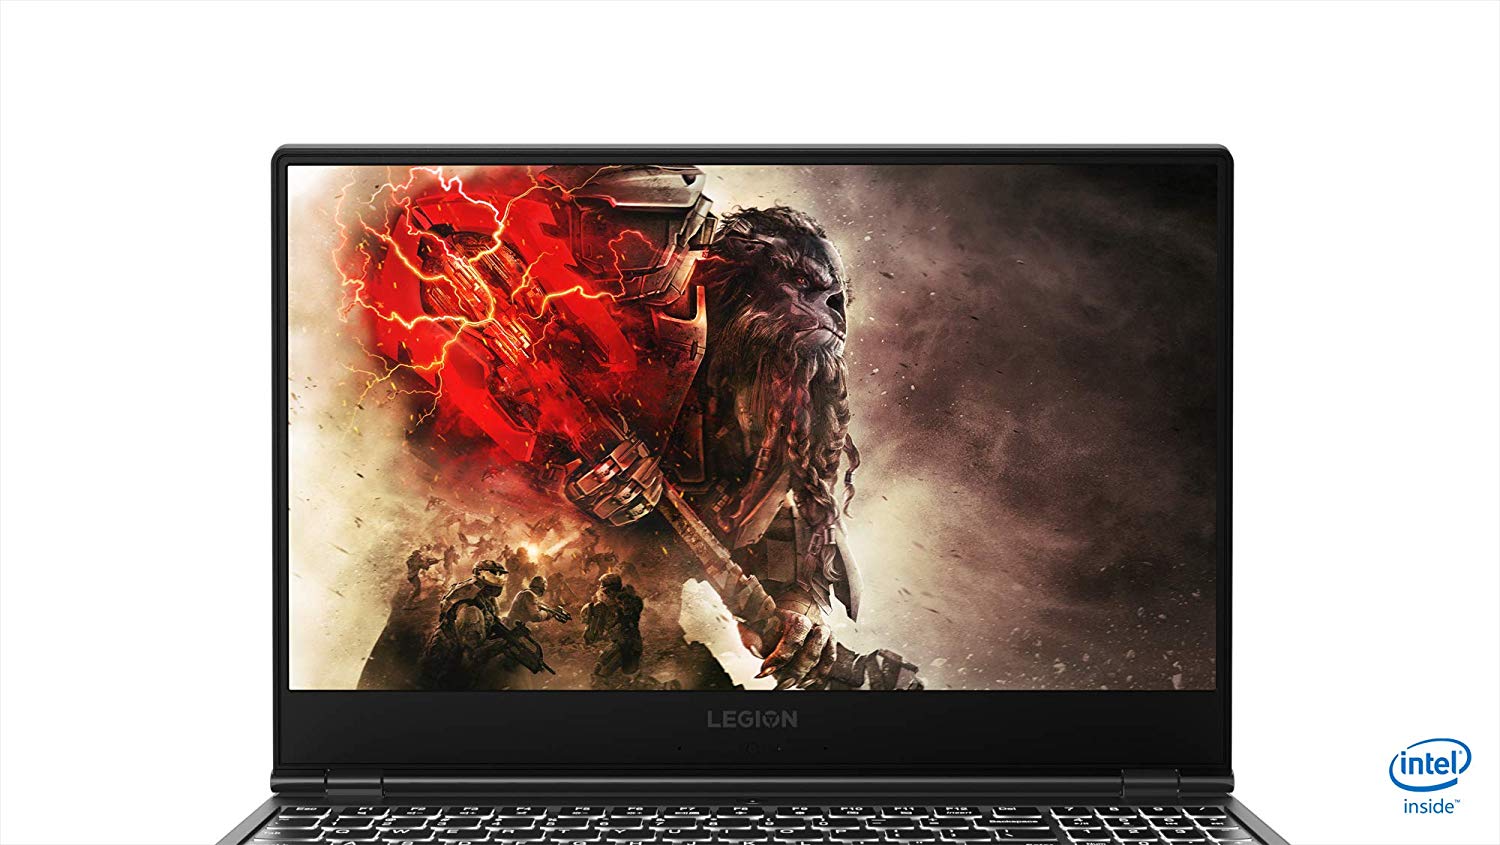 Lenovo Legion Y530 Intel Core I5 8th Gen 15.6 - inch Gaming FHD Laptop (8GB/ 1TB HDD +128GB SSD/ Windows 10 Home/ 4GB Graphics/ Black), 81FV00JLIN